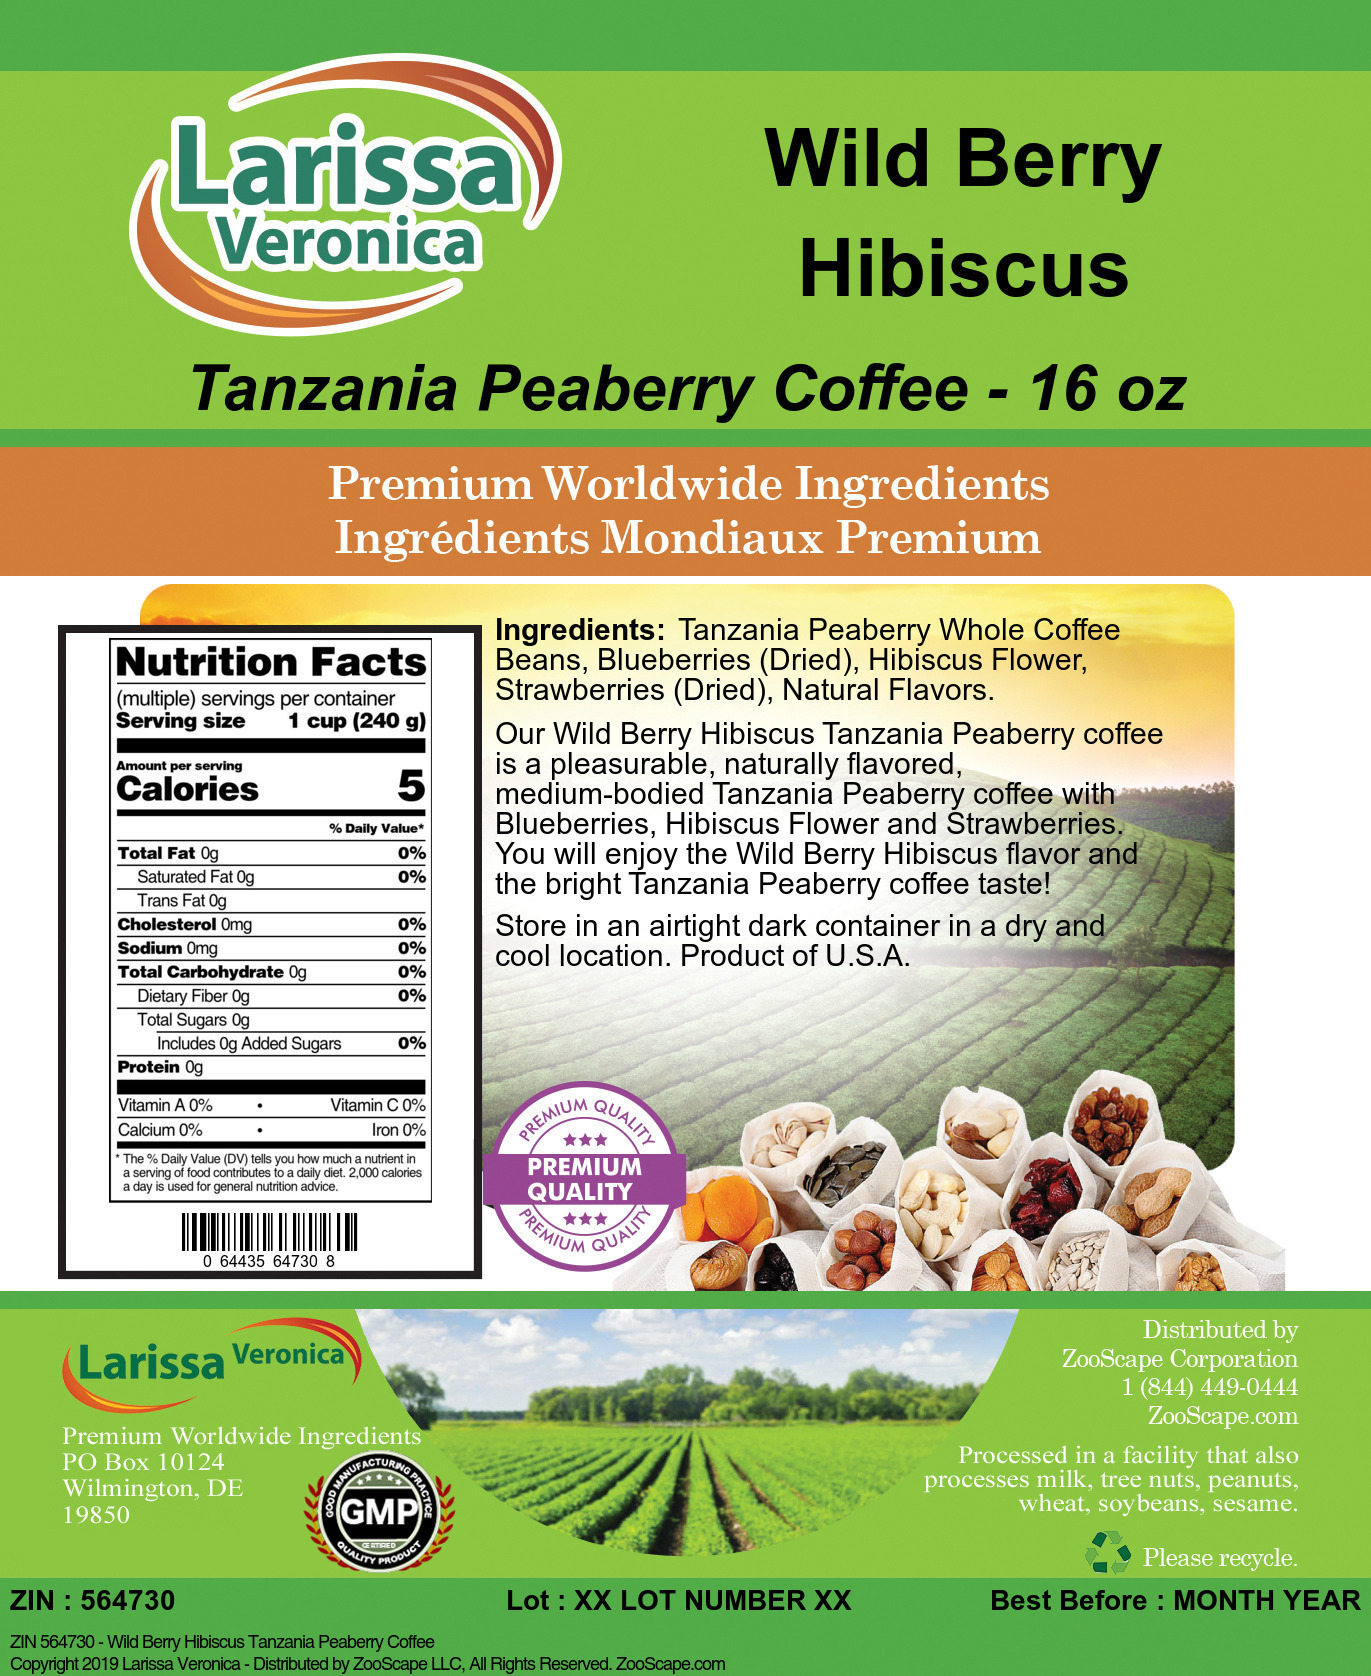 Wild Berry Hibiscus Tanzania Peaberry Coffee - Label